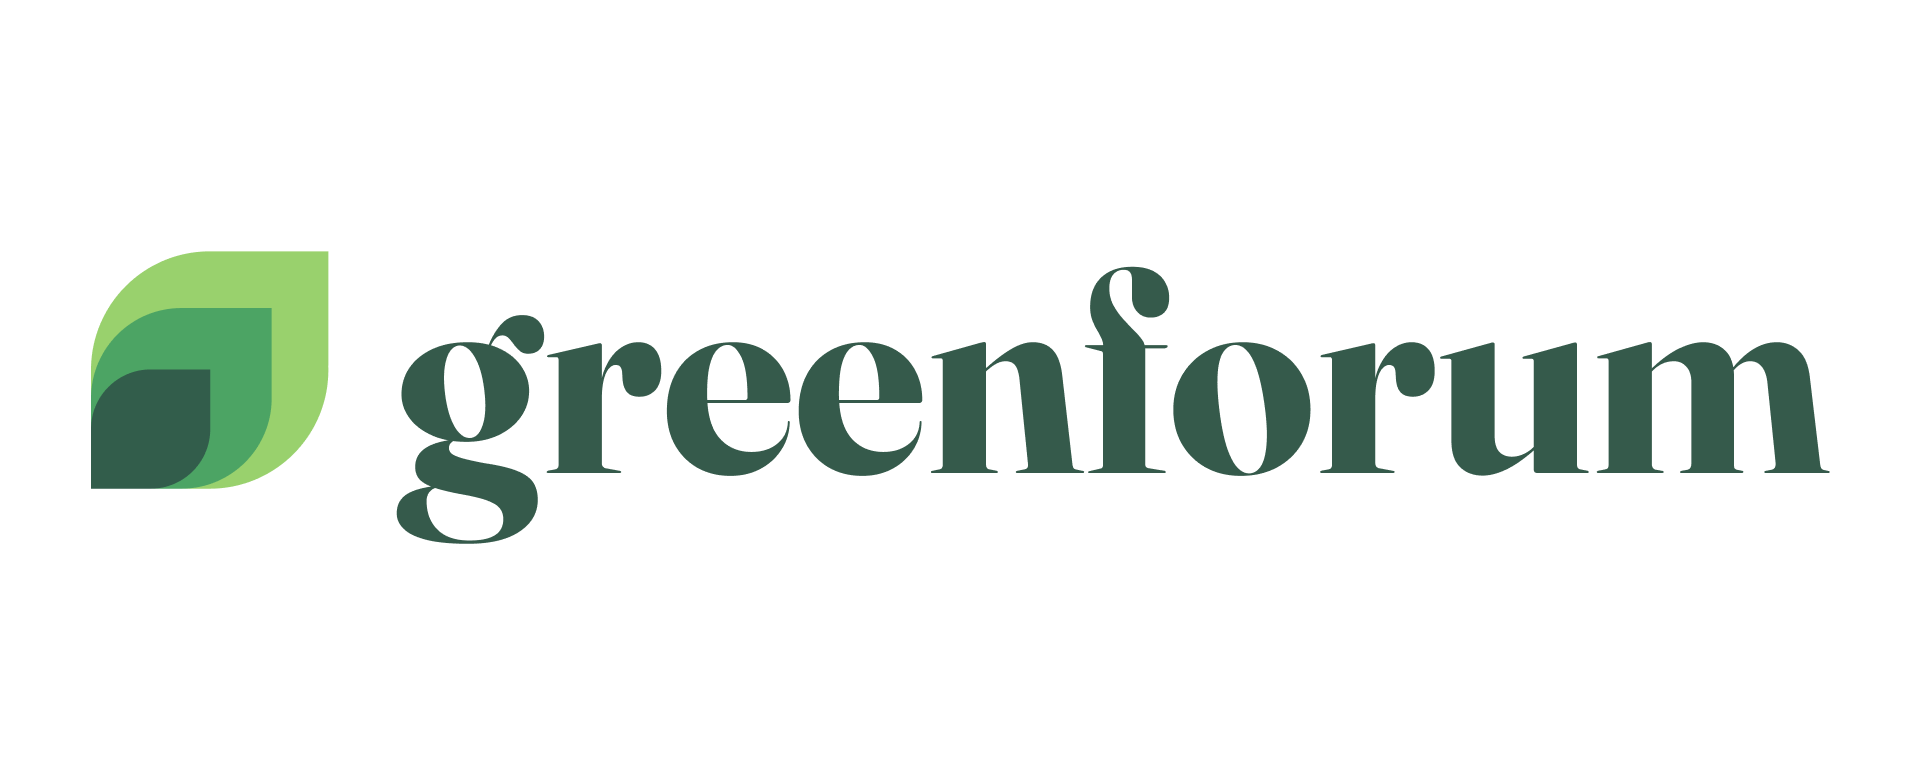 Greenforum logo